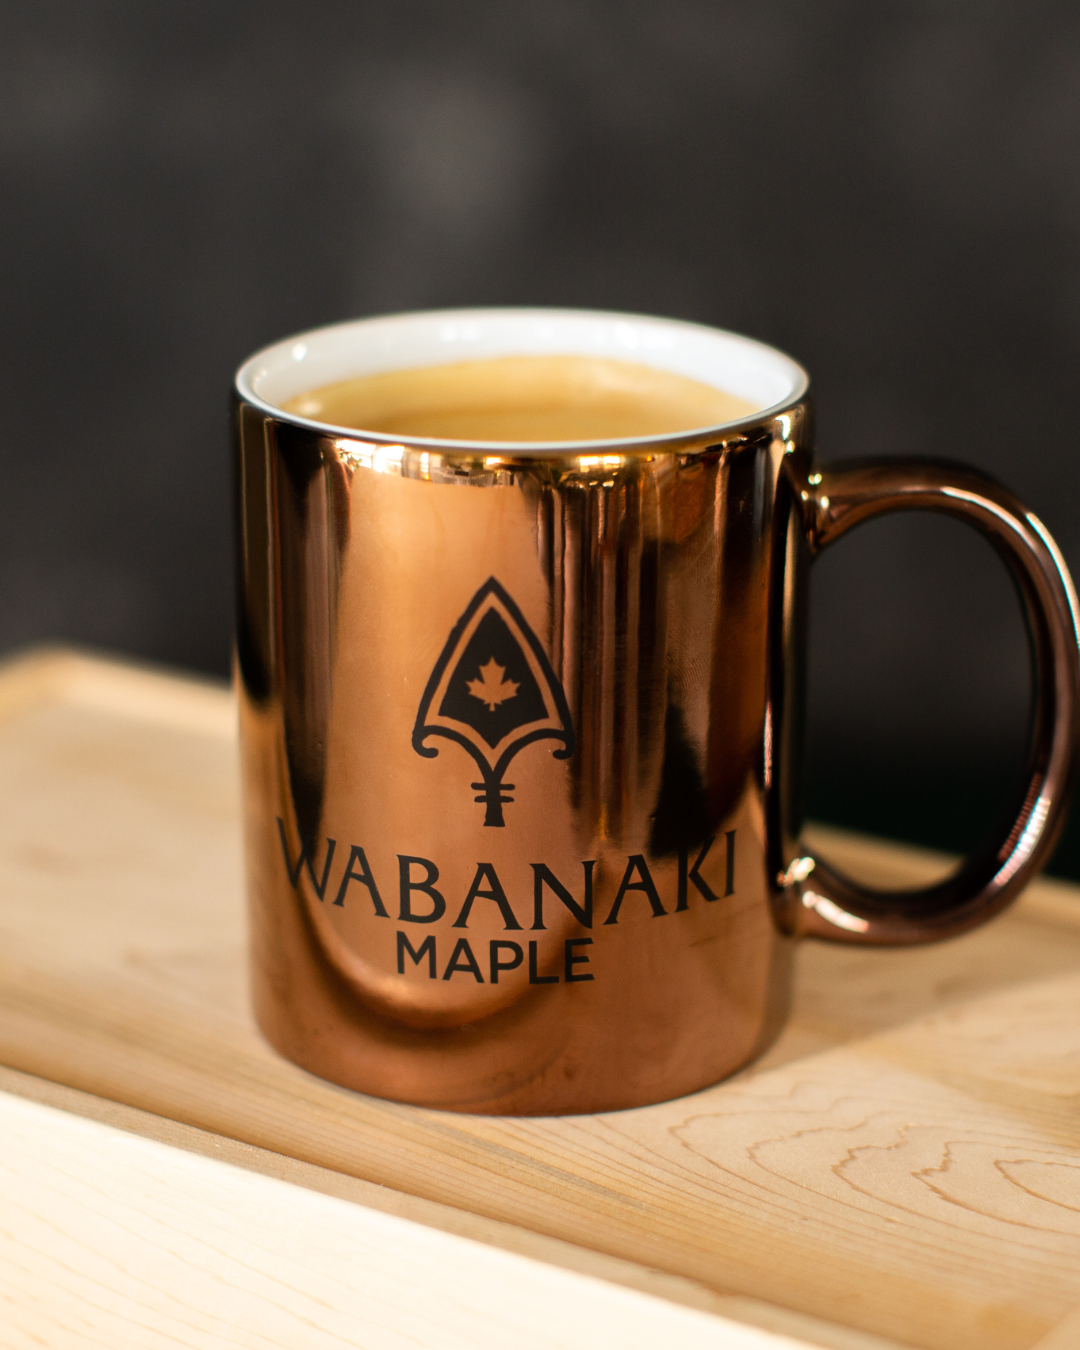 Wabanaki Maple mug with a Pumpkin Spice Latte as the drink in the mug